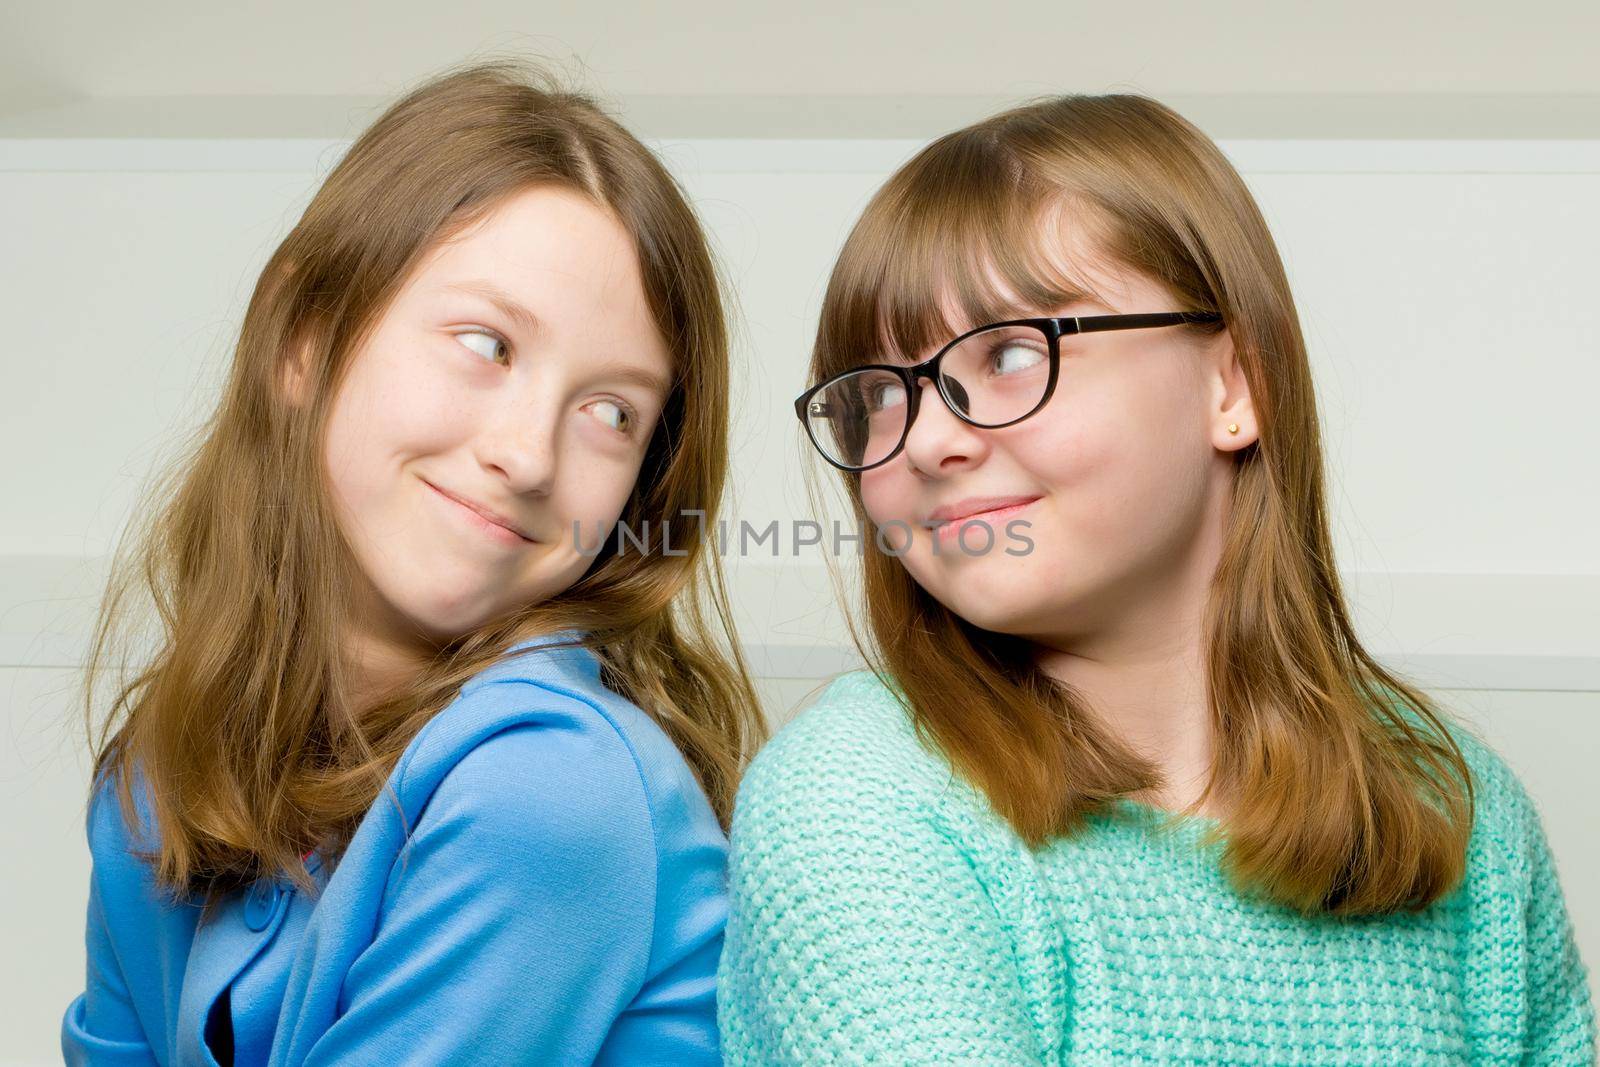 Two cute little girls close-up by kolesnikov_studio